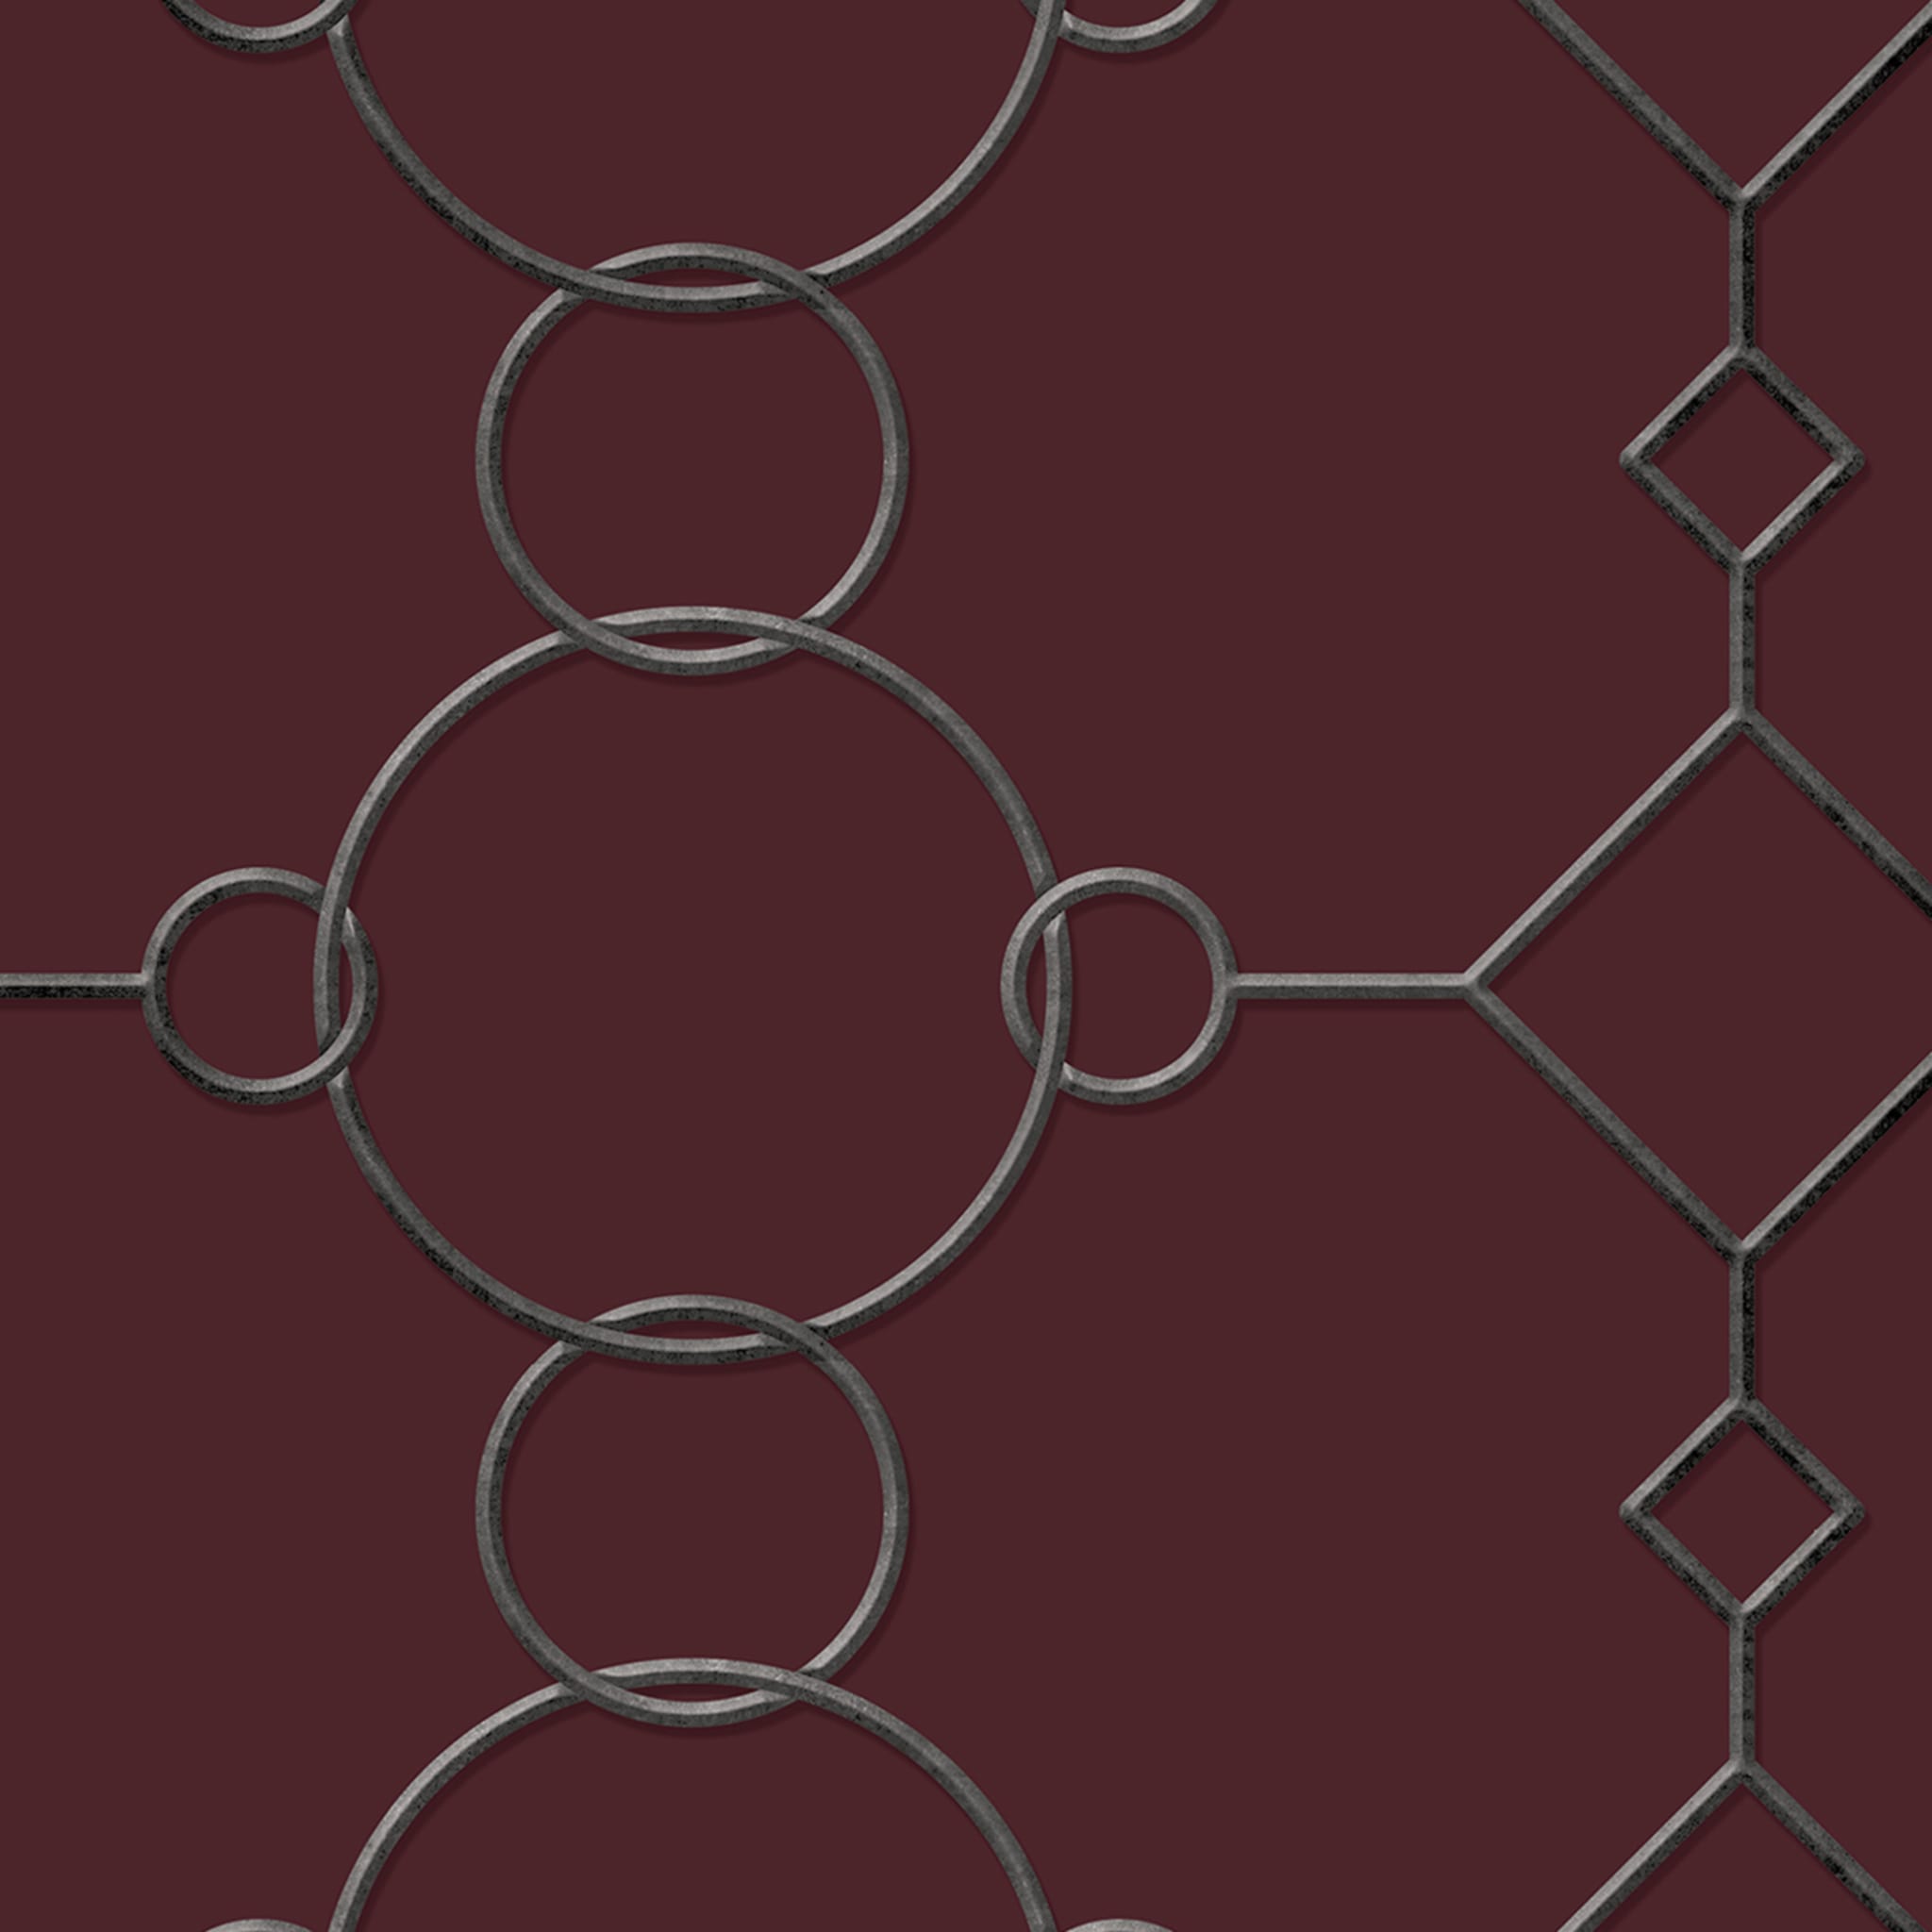 Chain Red Wallpaper - Alternative view 1